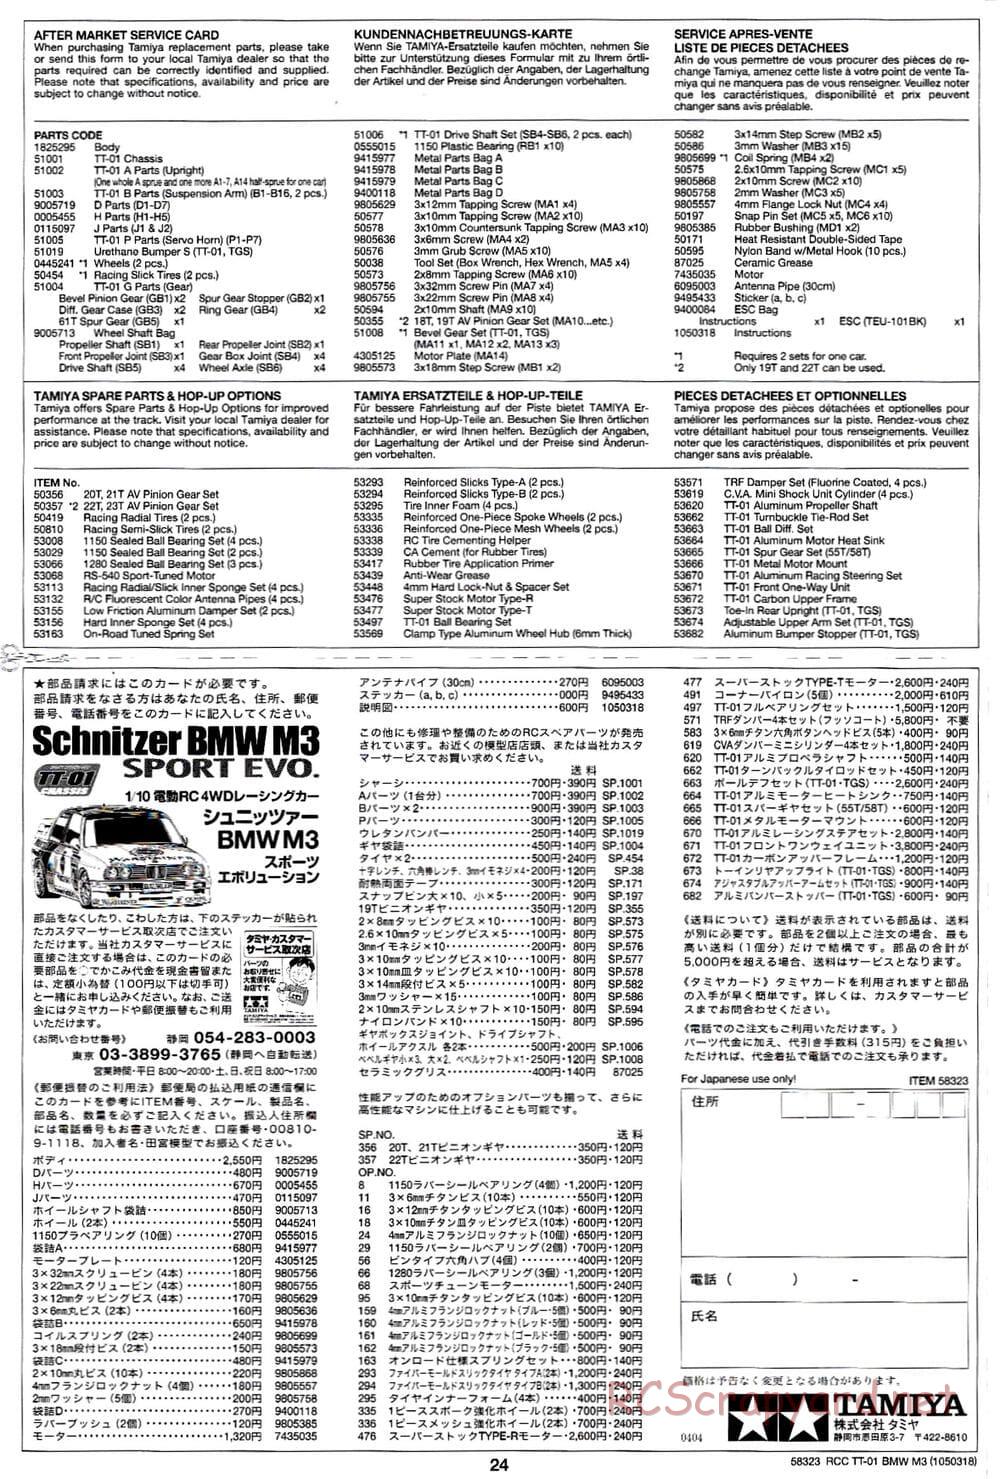 Tamiya - Schnitzer BMW M3 Sport Evo - TT-01 Chassis - Manual - Page 24